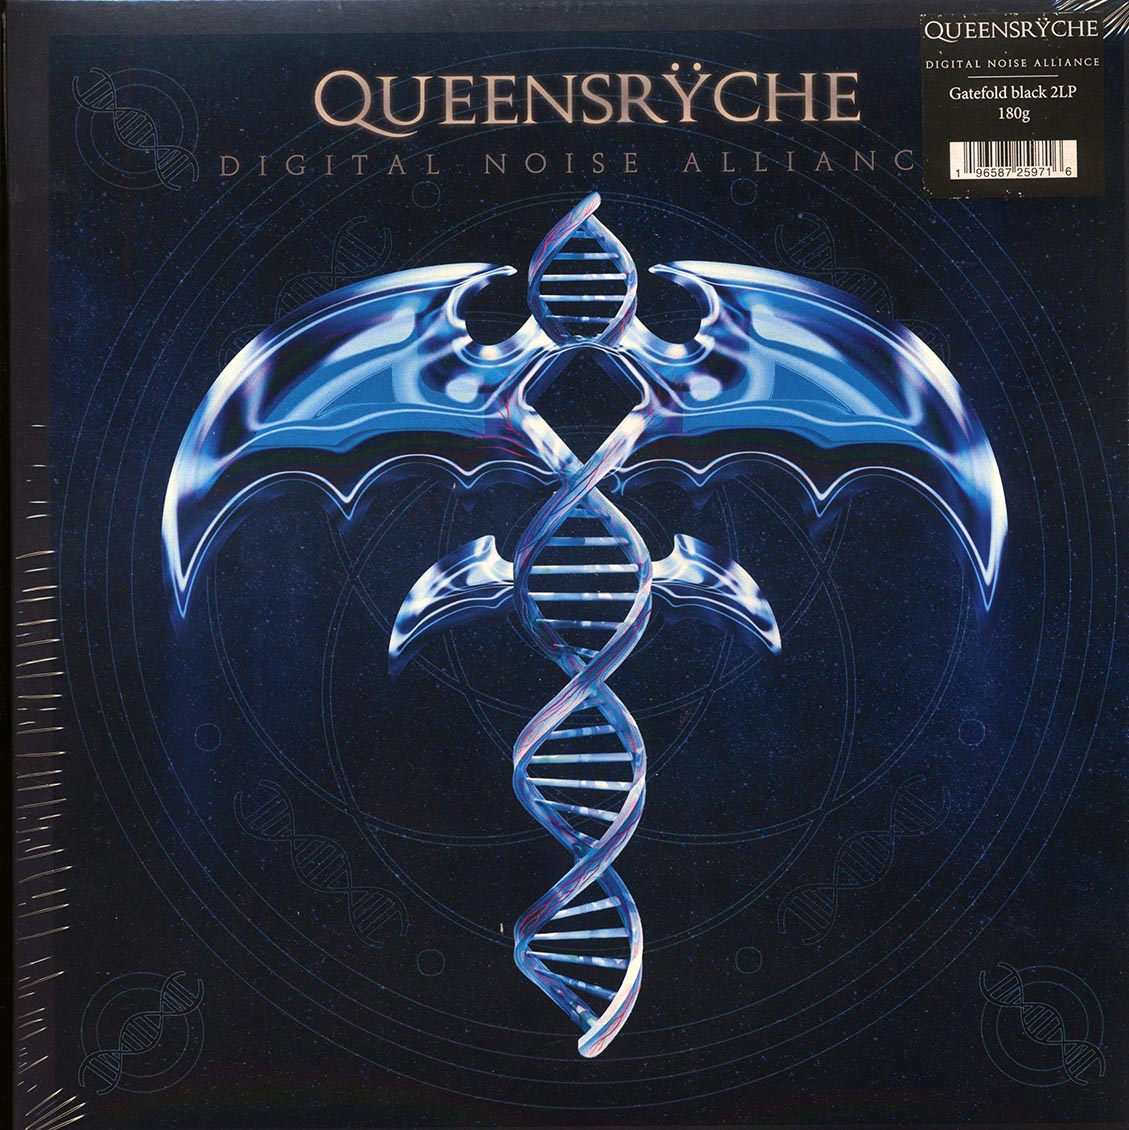 Queensryche - Digital Noise Alliance (2xLP) (180g) - Vinyl LP